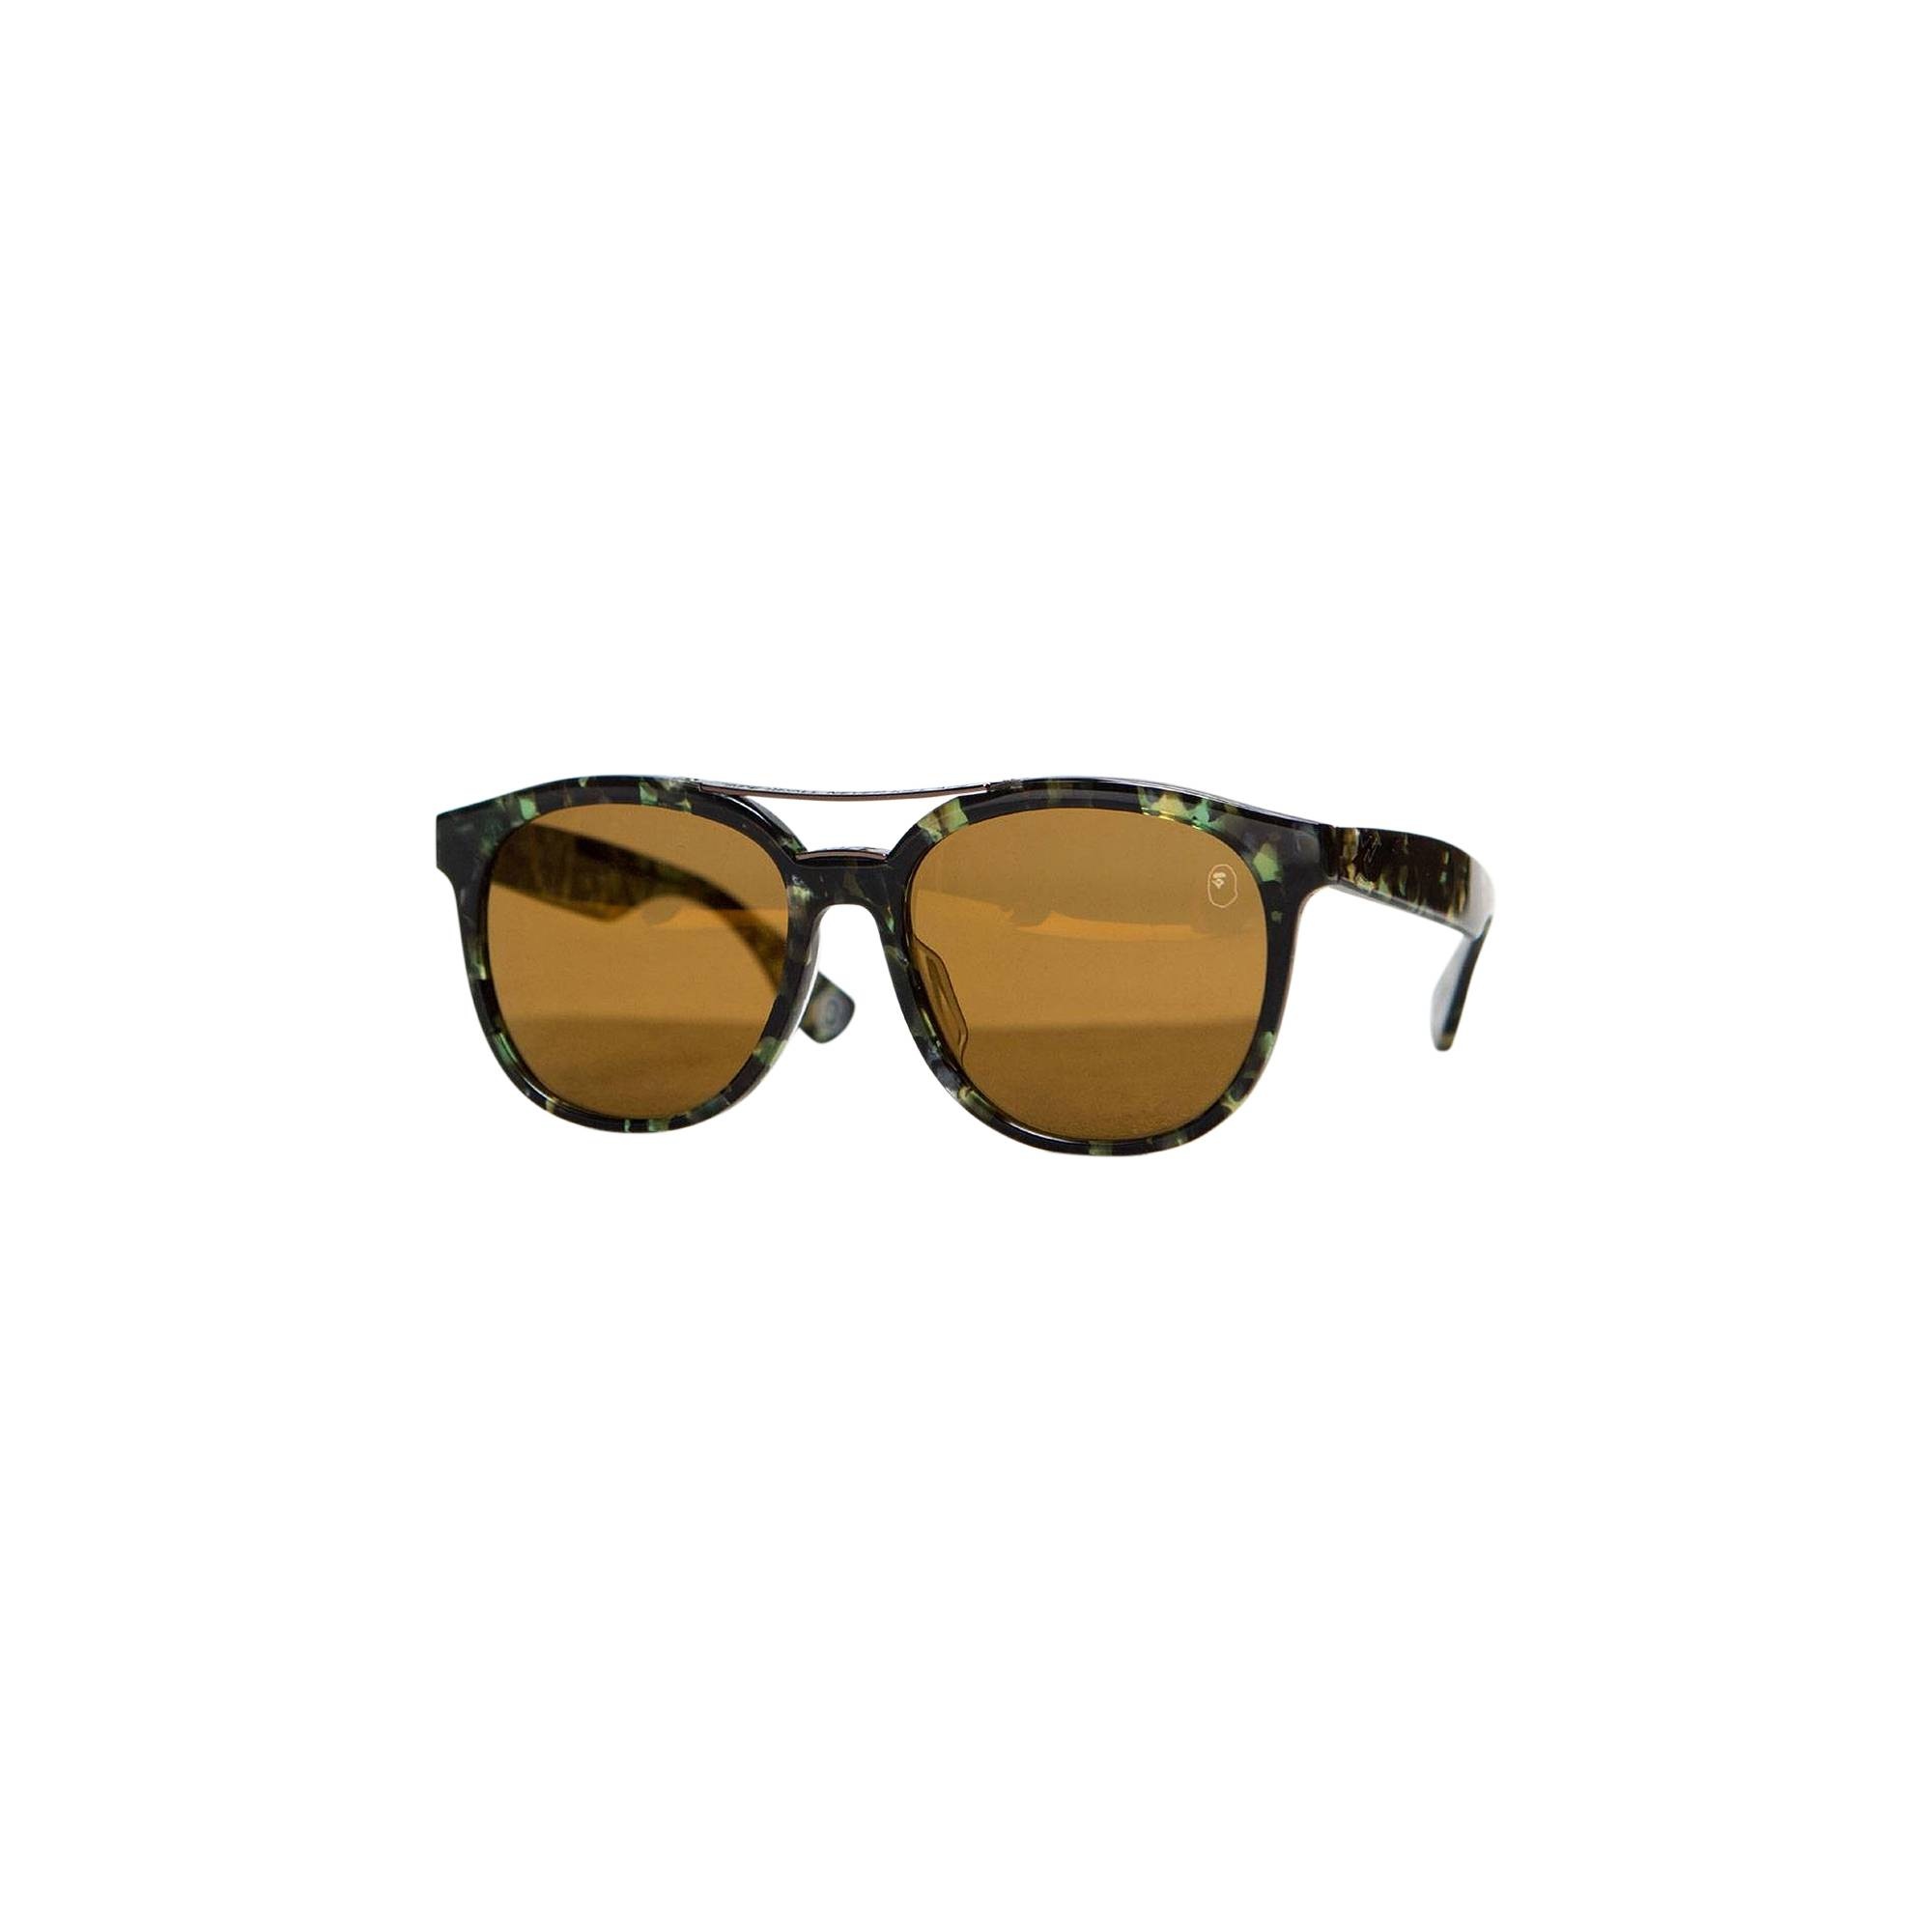 BAPE Sunglasses 'Green' - 1